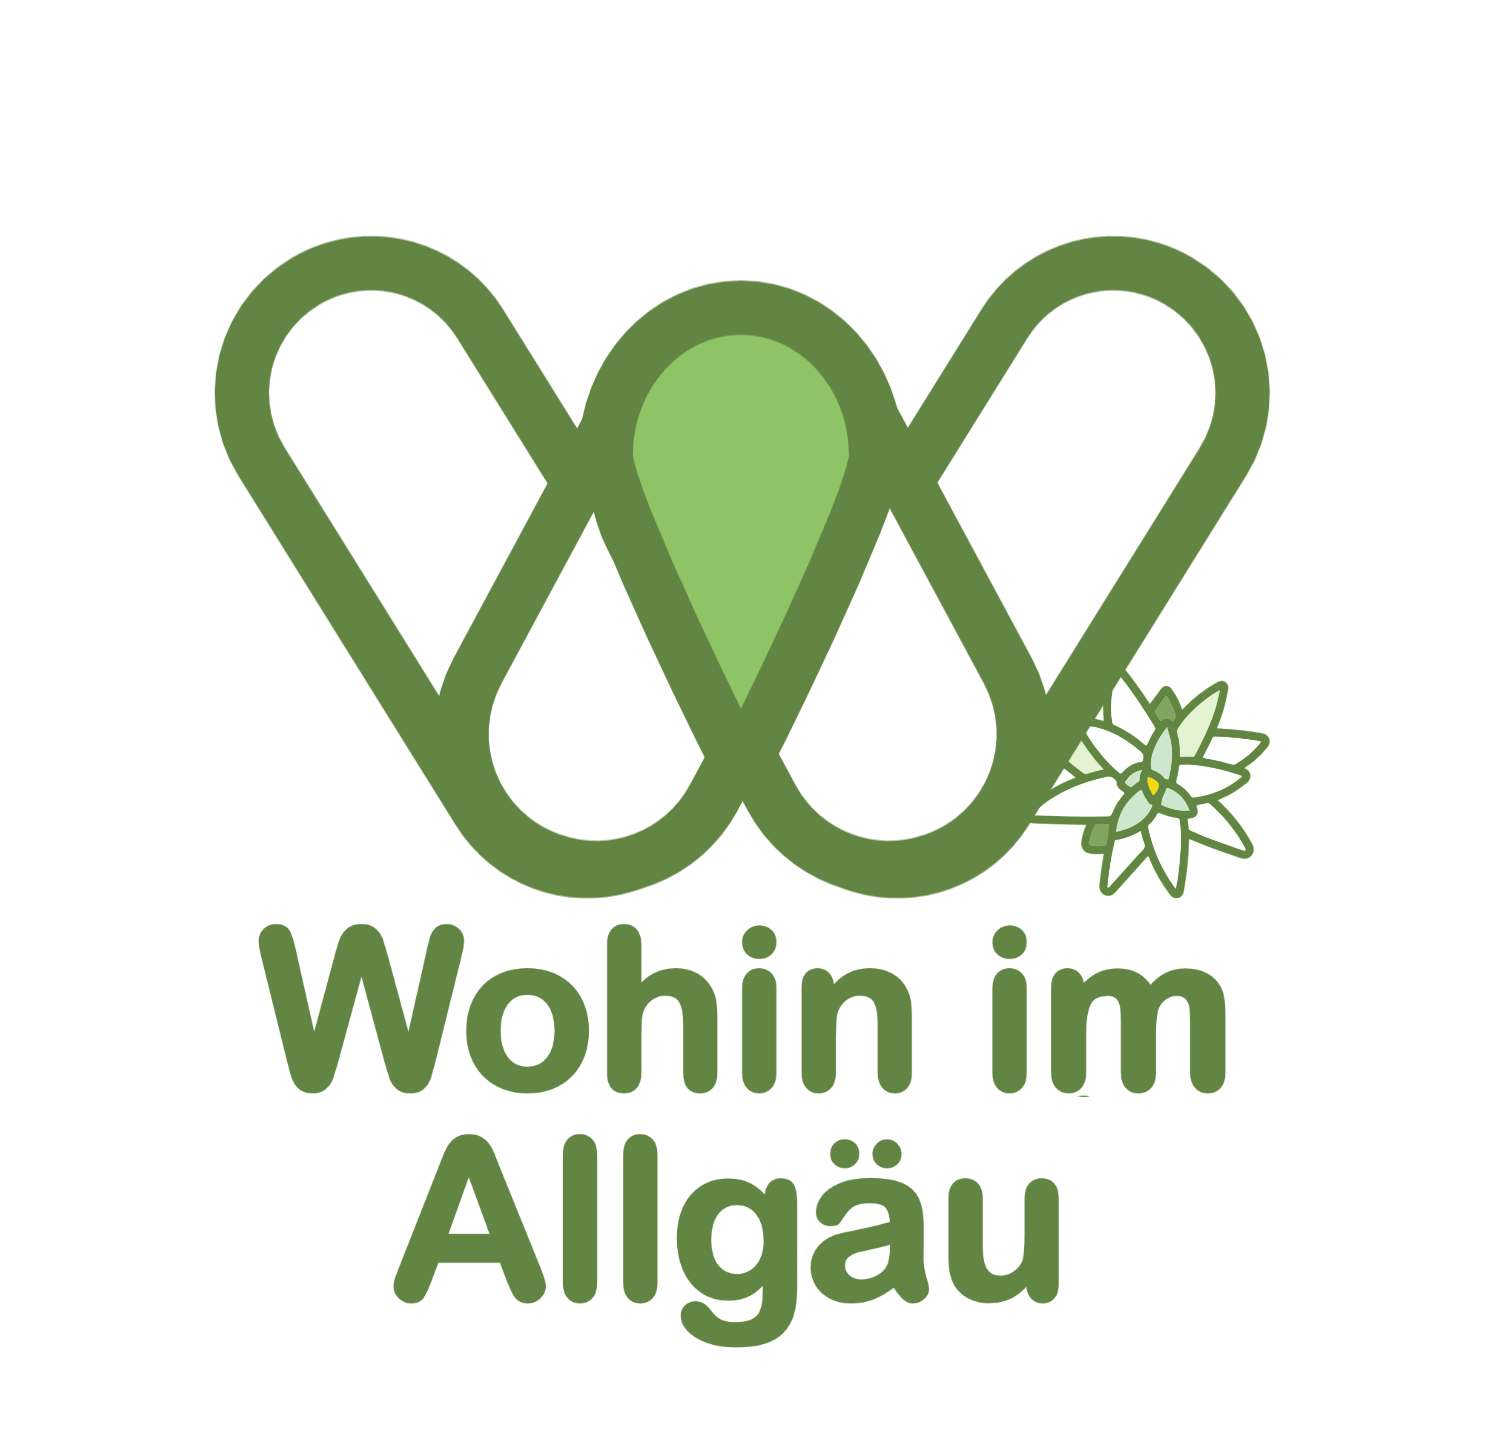 Wohin im Allgäu review